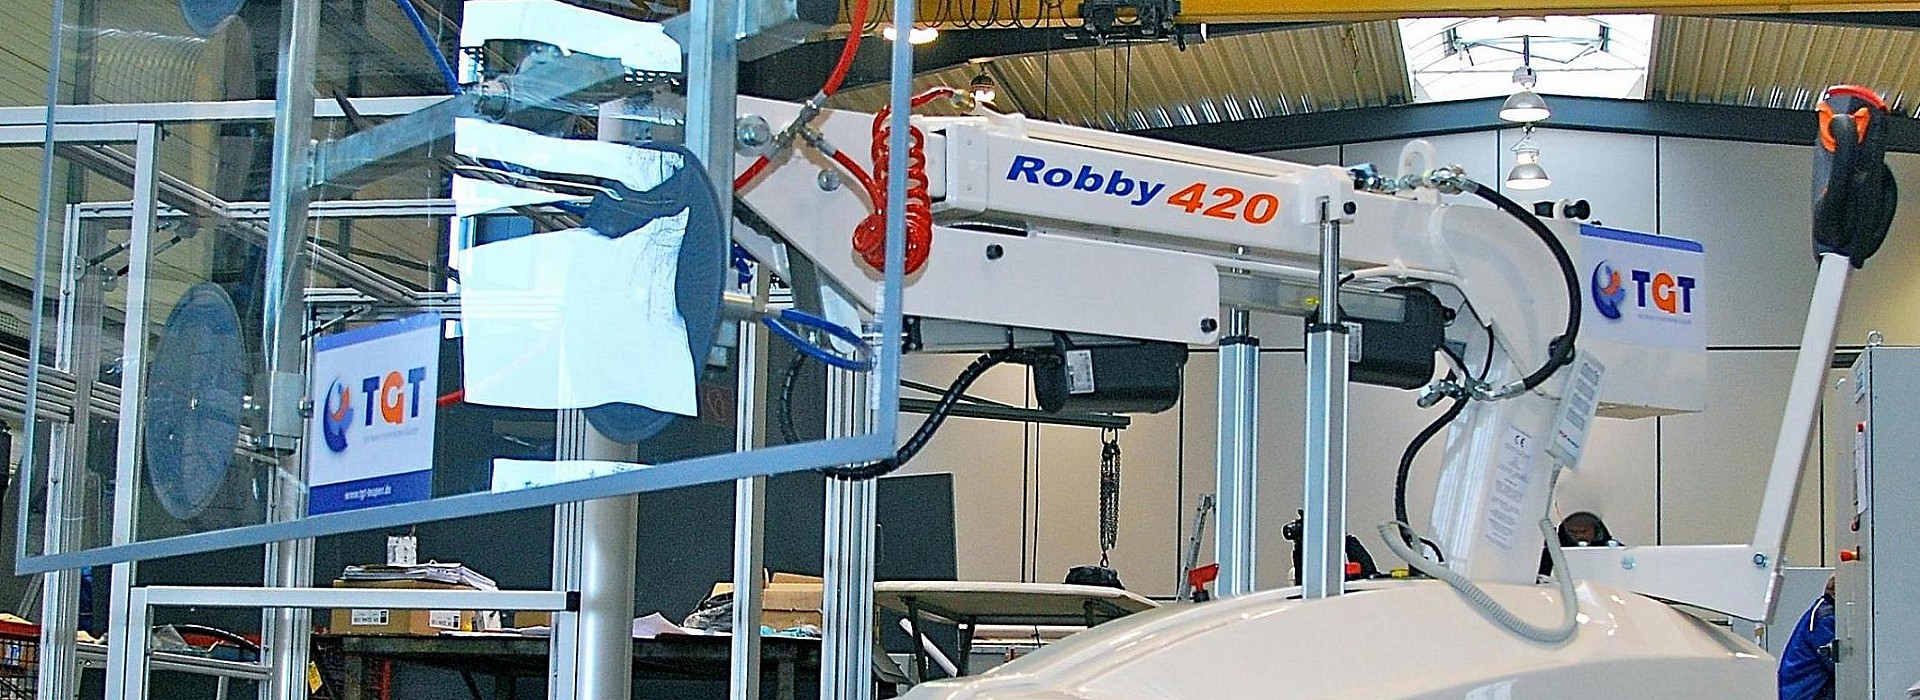 Robby-420-b.jpg